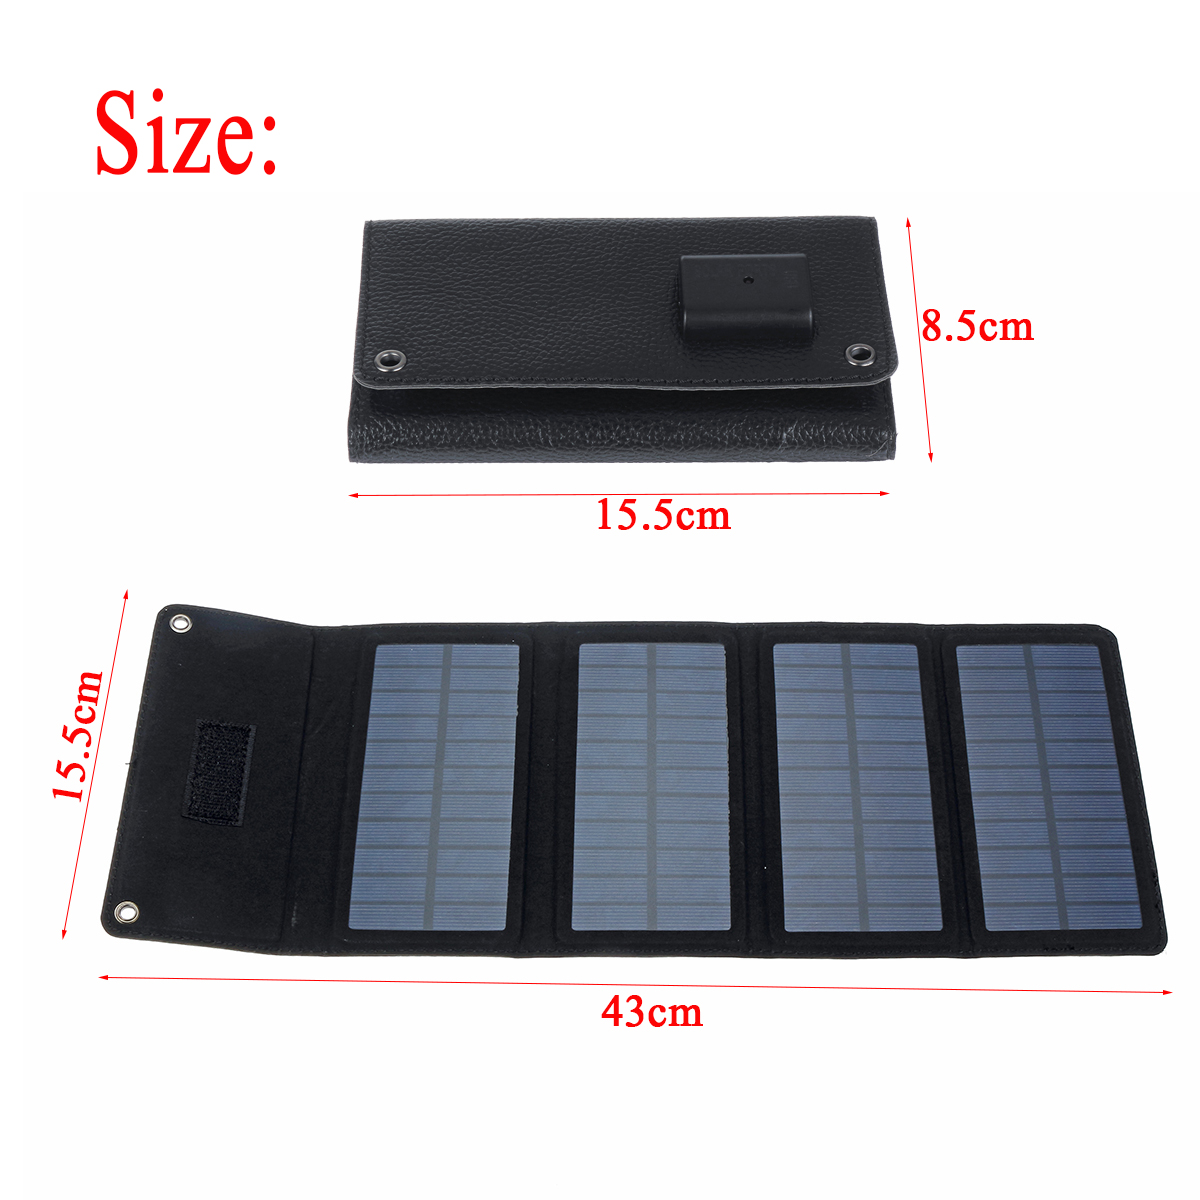 7W 5V Waterproof Foldable Mono-crystalline Silicon Solar Panel With LED Charging indicator & USB Interface 16